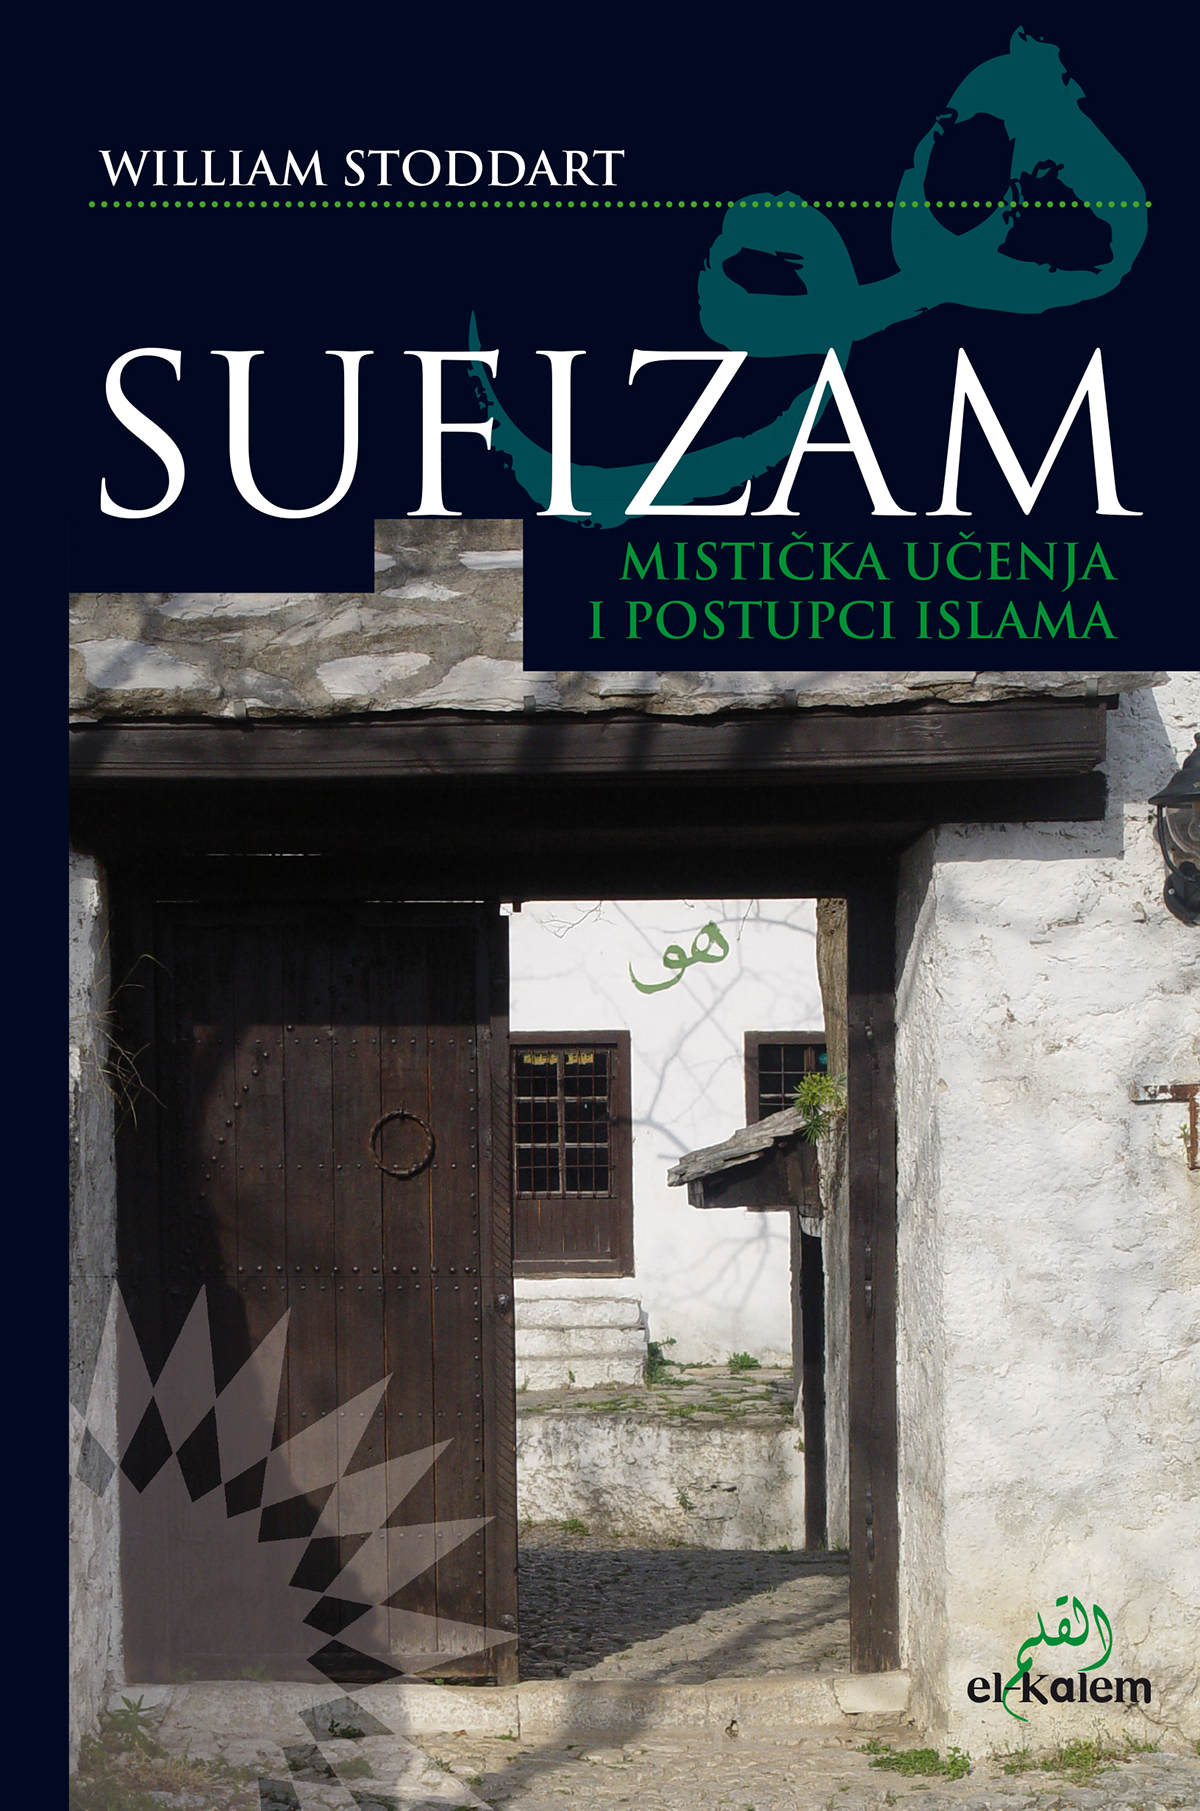 Sufizam knjiga book Buna Tekija Tekke stoddart photo islam HU